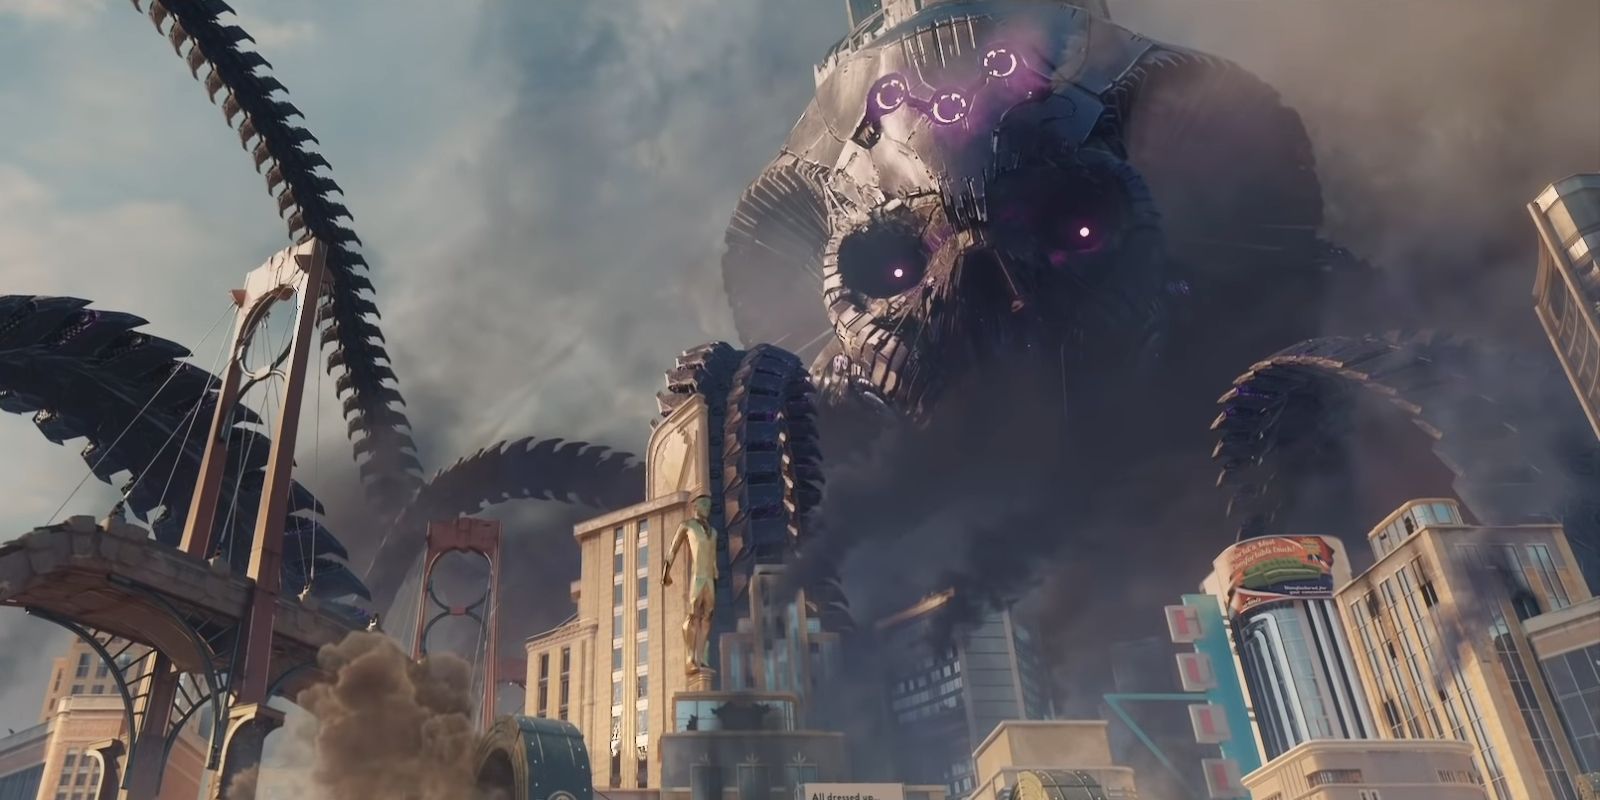 Brainiac's Skull Ship invading Metropolis in Suicide Squad Kill The Justice League